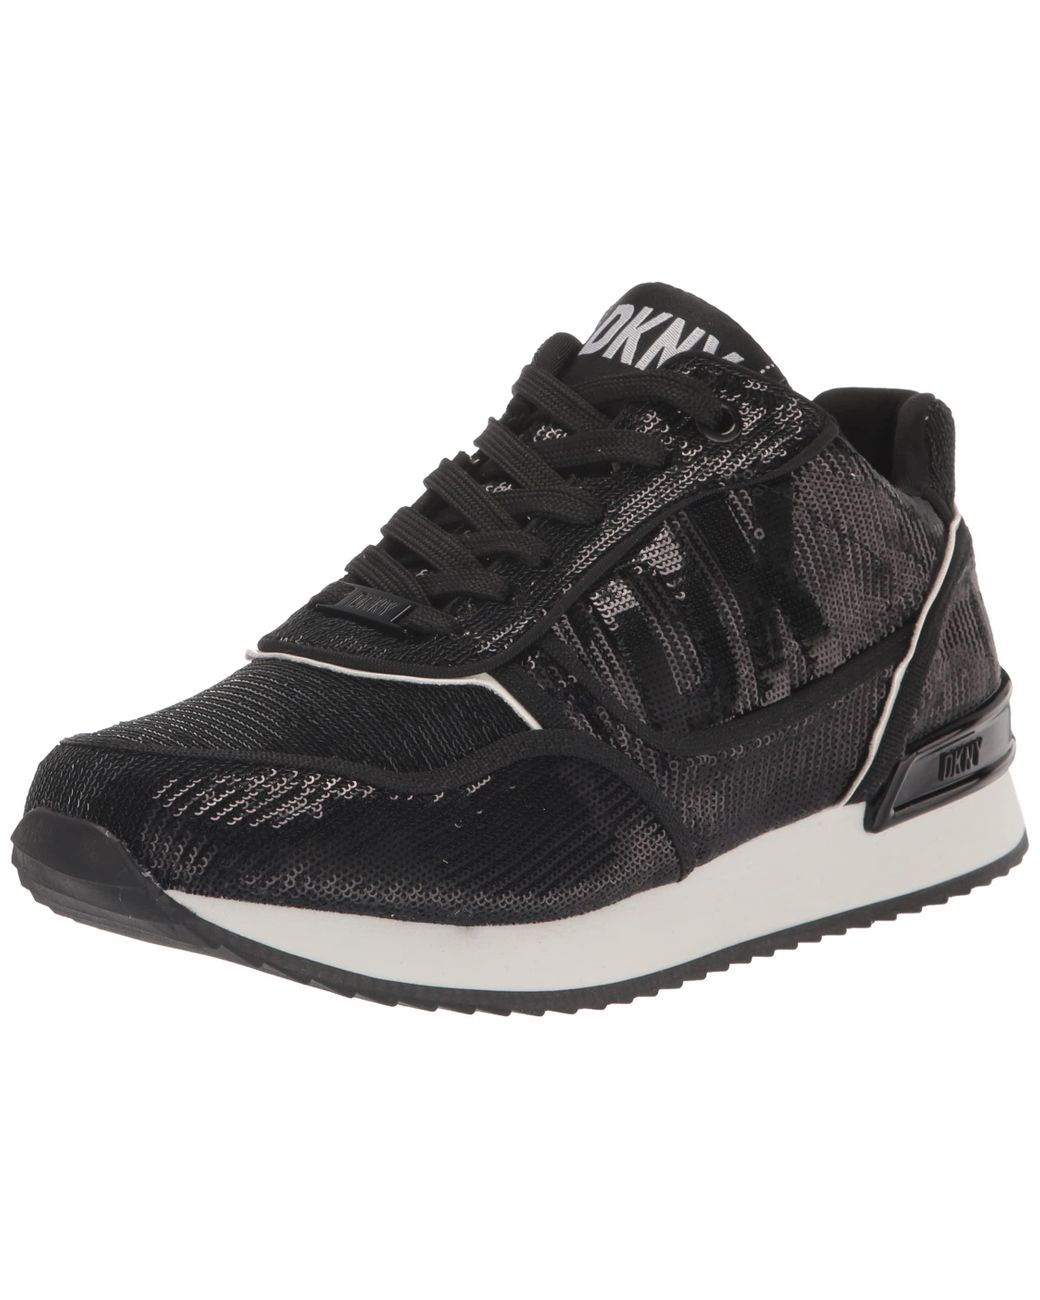 Den fremmede Forenkle Emigrere DKNY Essential Footwear Lightweight Slip On Comfort Sneaker in Black | Lyst